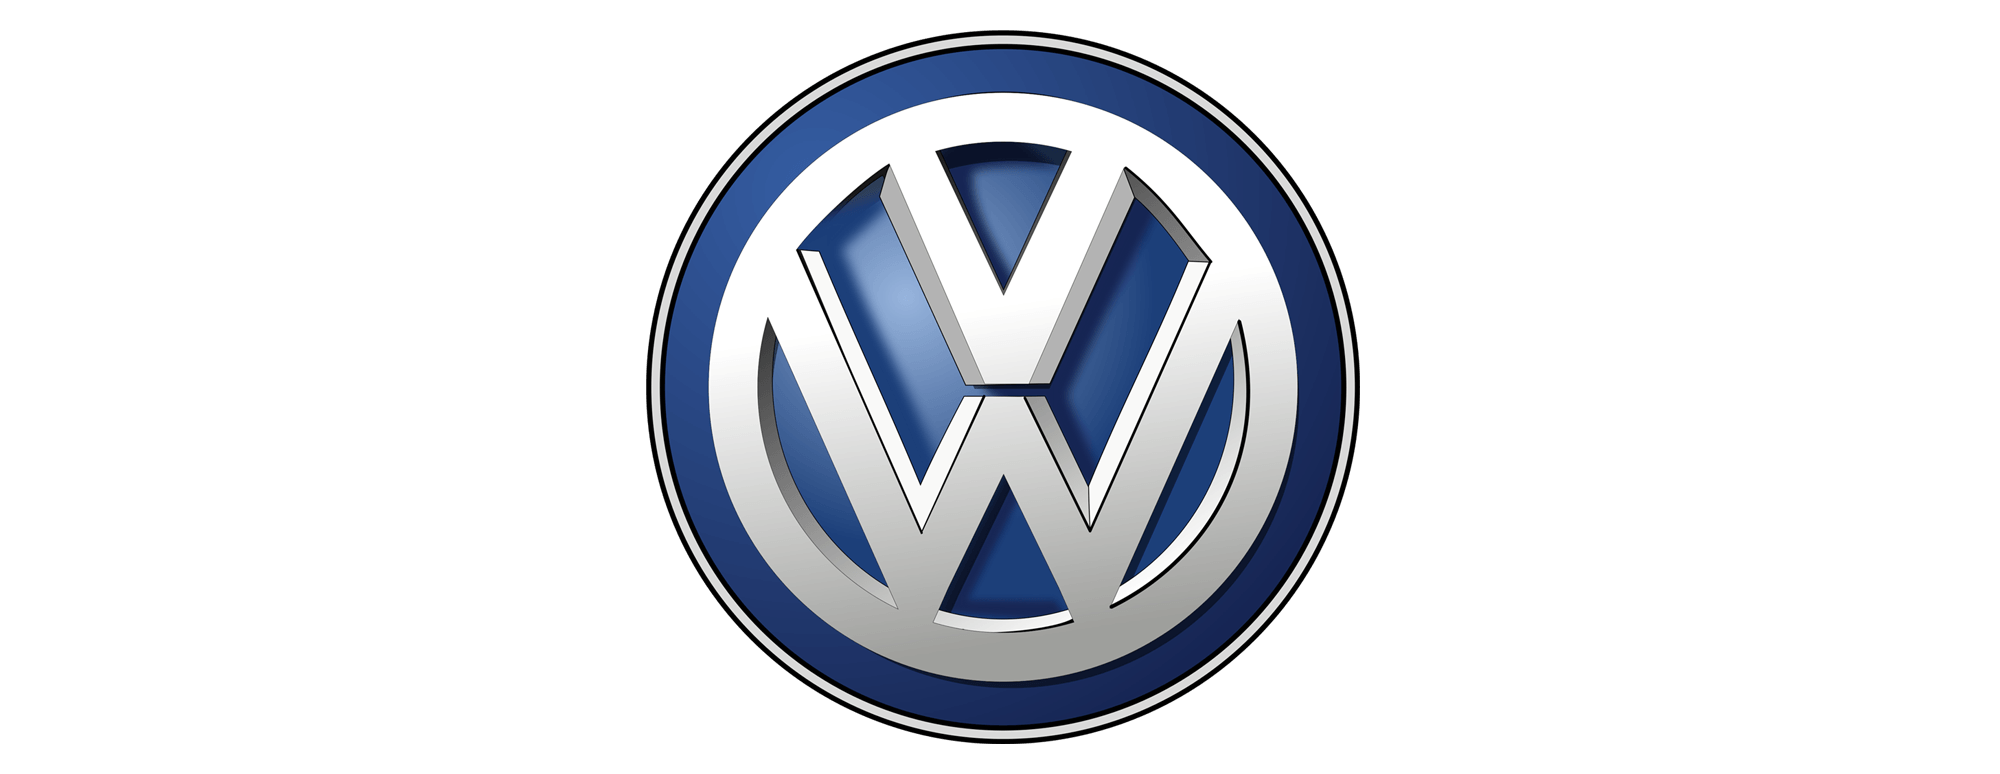 Original Volkswagen Logo - Volkswagen Logo Meaning and History, latest models | World Cars Brands